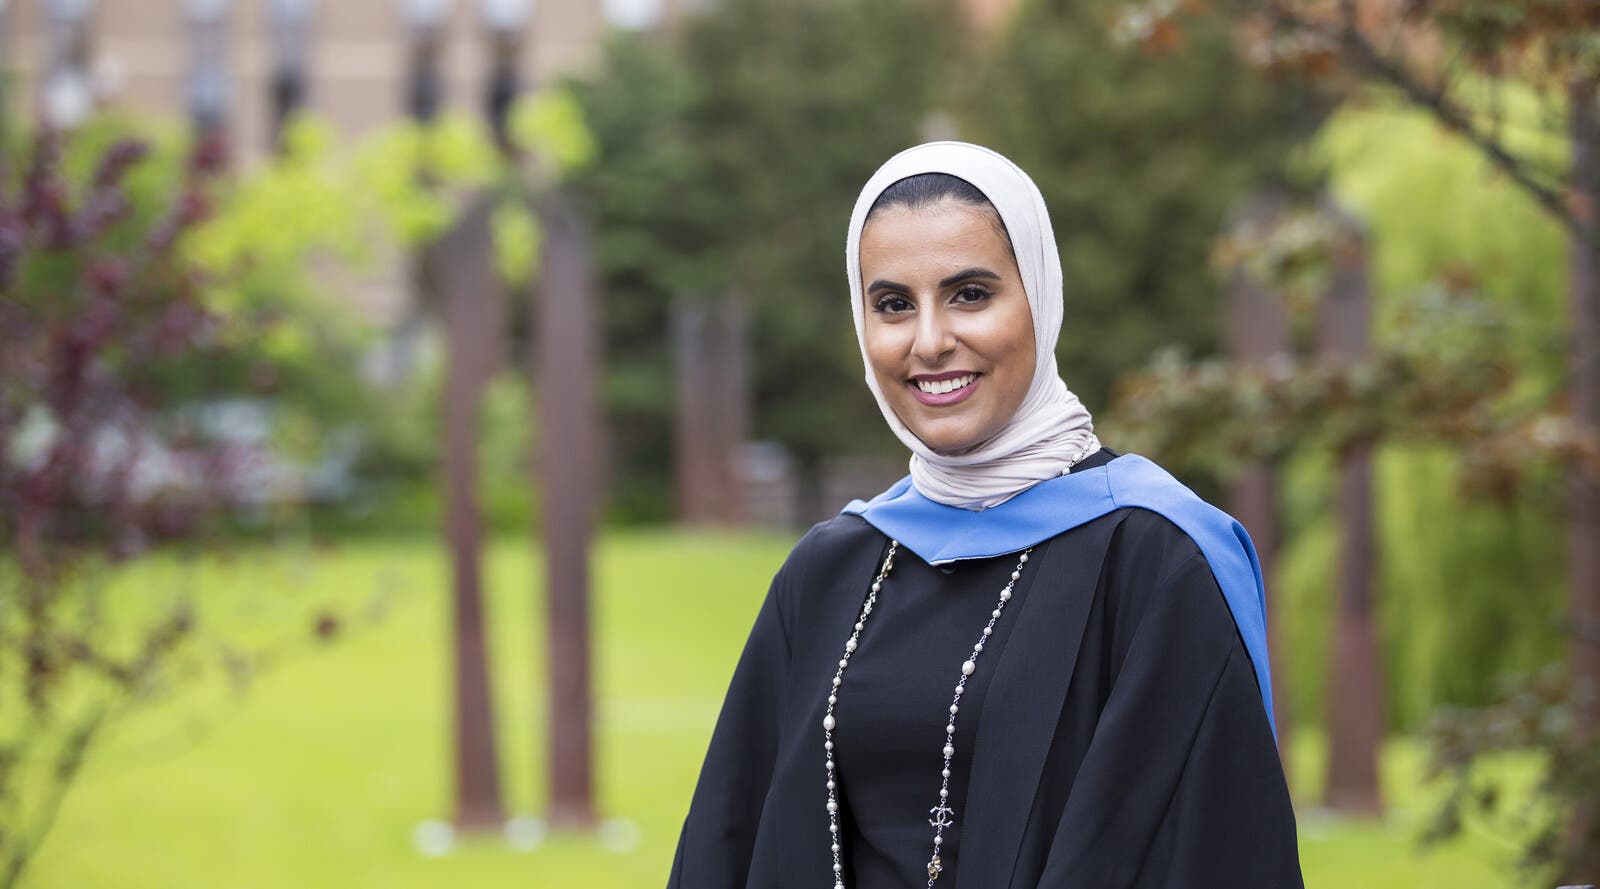 Maha, a University of Strathclyde graduate